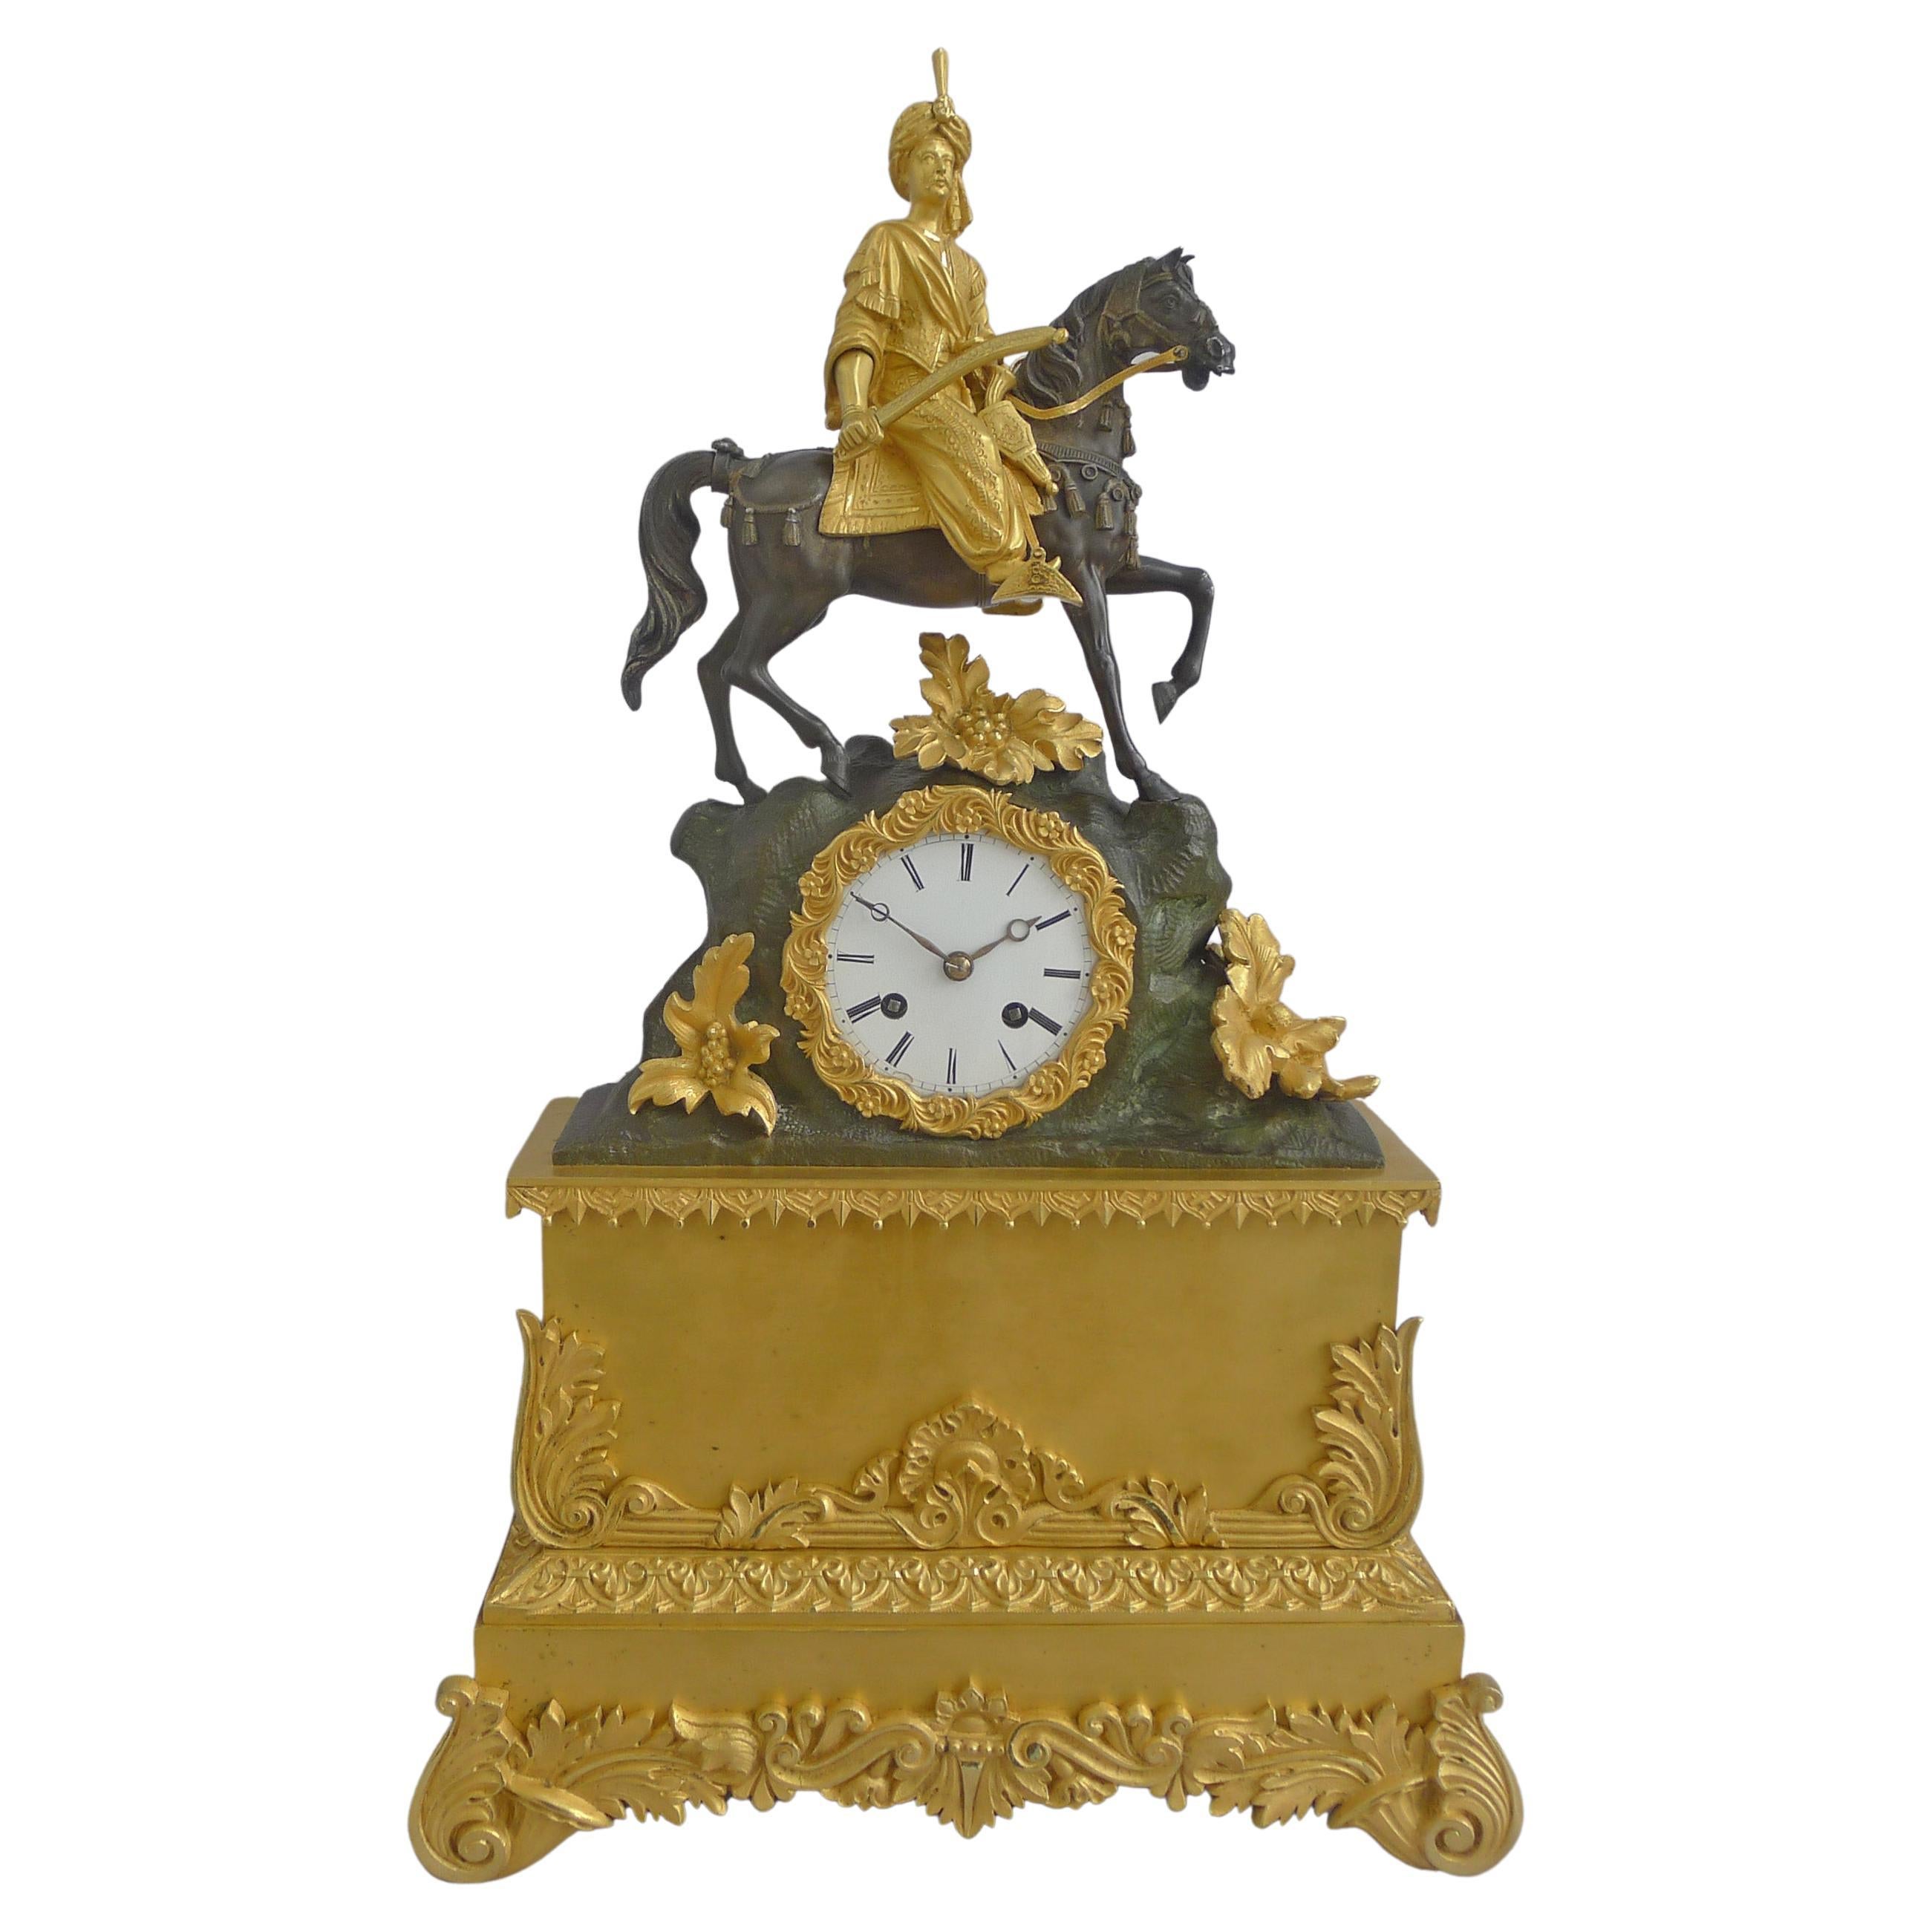 French, Greek Revolution or Hellenistic Mantel Clock of Turk on Horseback